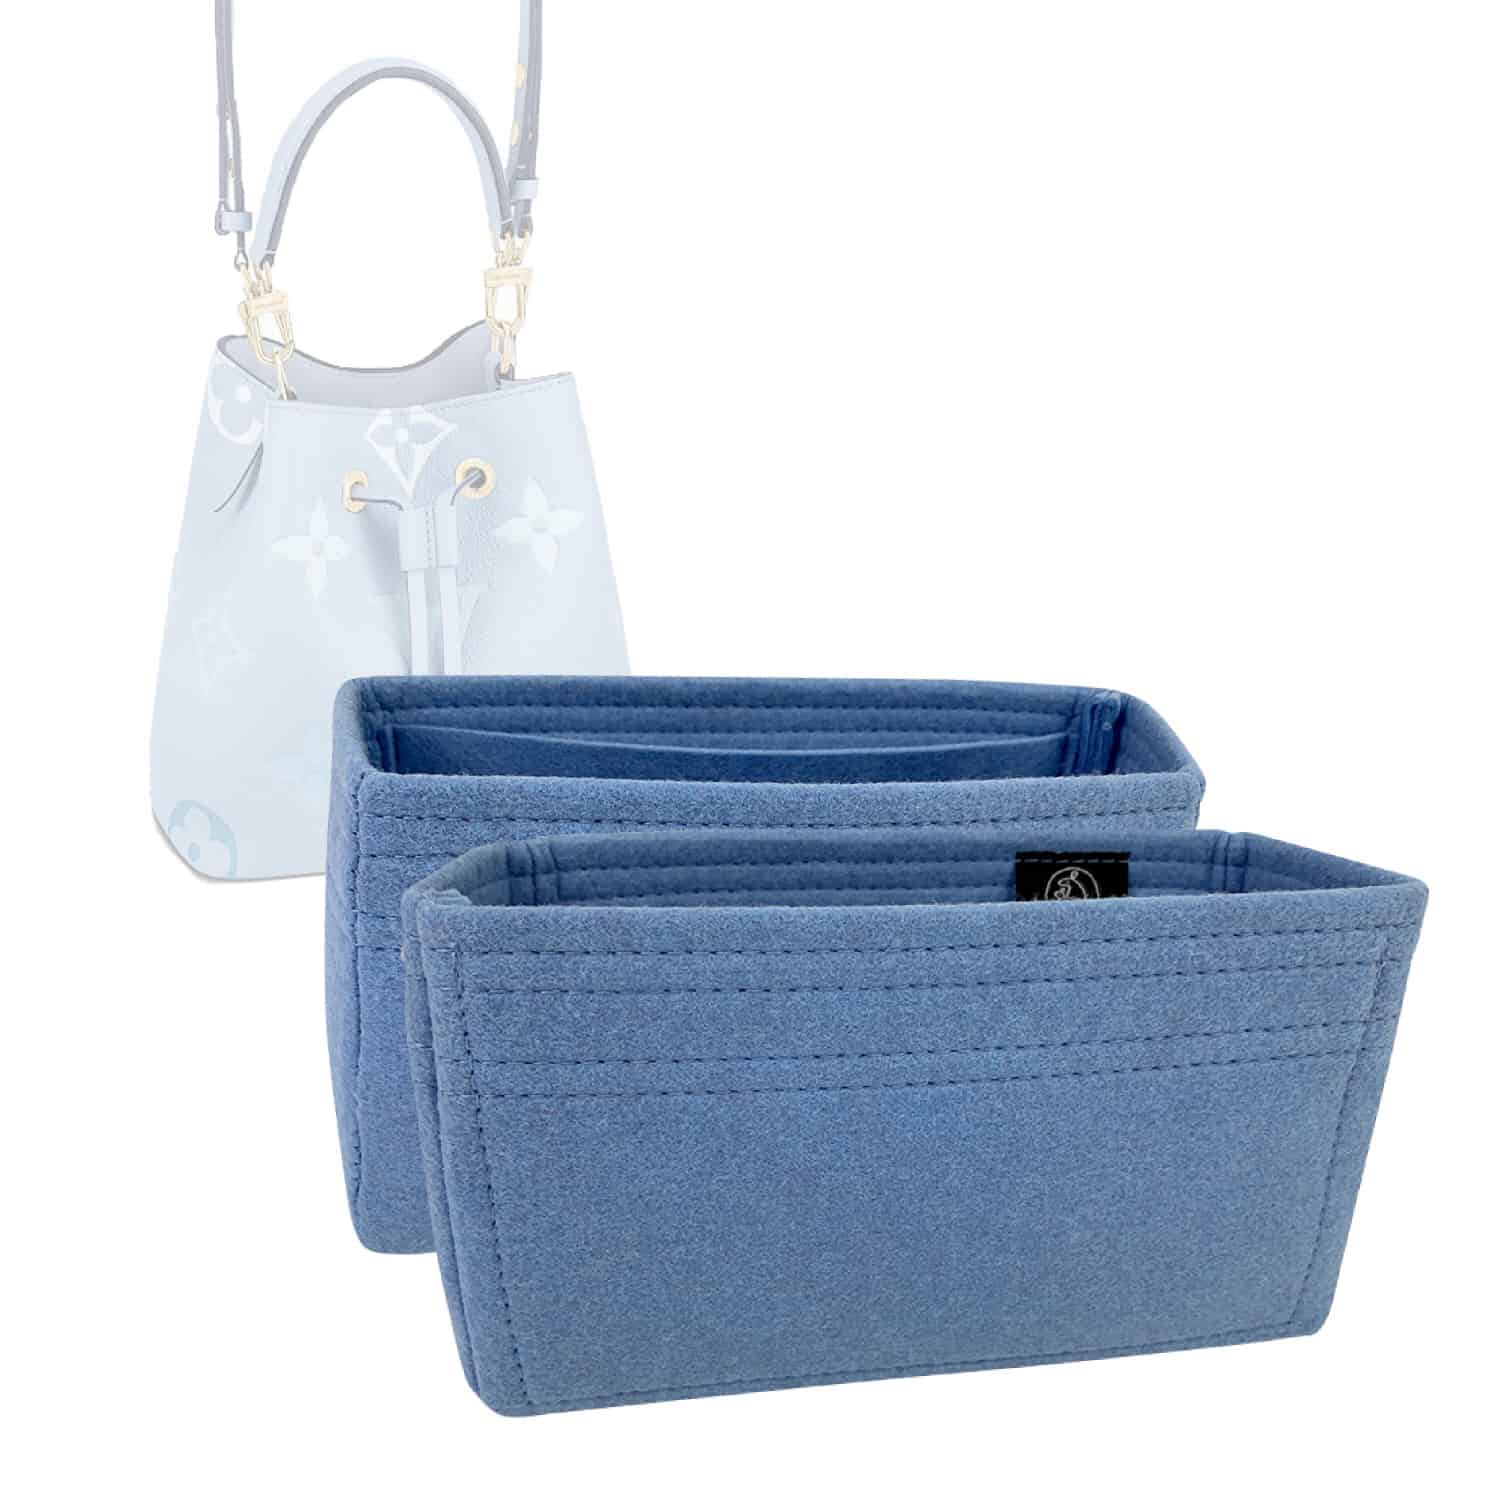  Zoomoni Bag Organizer for Louis Vuitton Dopp Kit Toilet Pouch  Bag - Premium Felt Purse Handbag Insert Liner Shaper (Handmade) Soft  Structure Support (20 Color Options) : Handmade Products